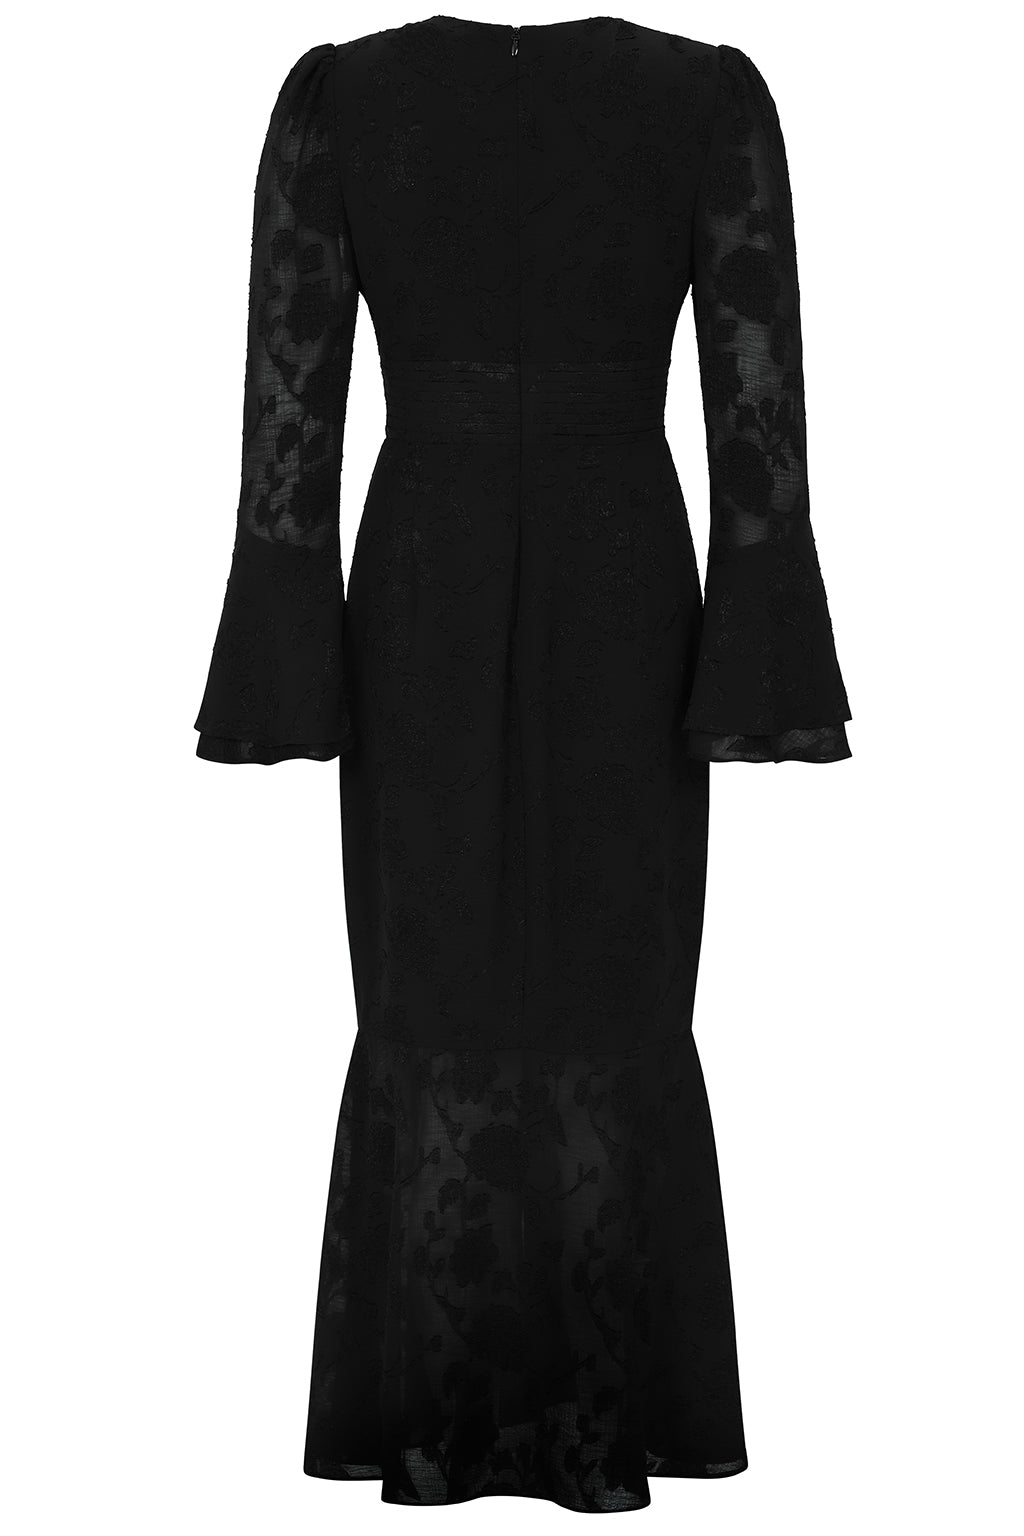 LAUREN Rose Button Maxi Dress in Black Floral Textured Chiffon